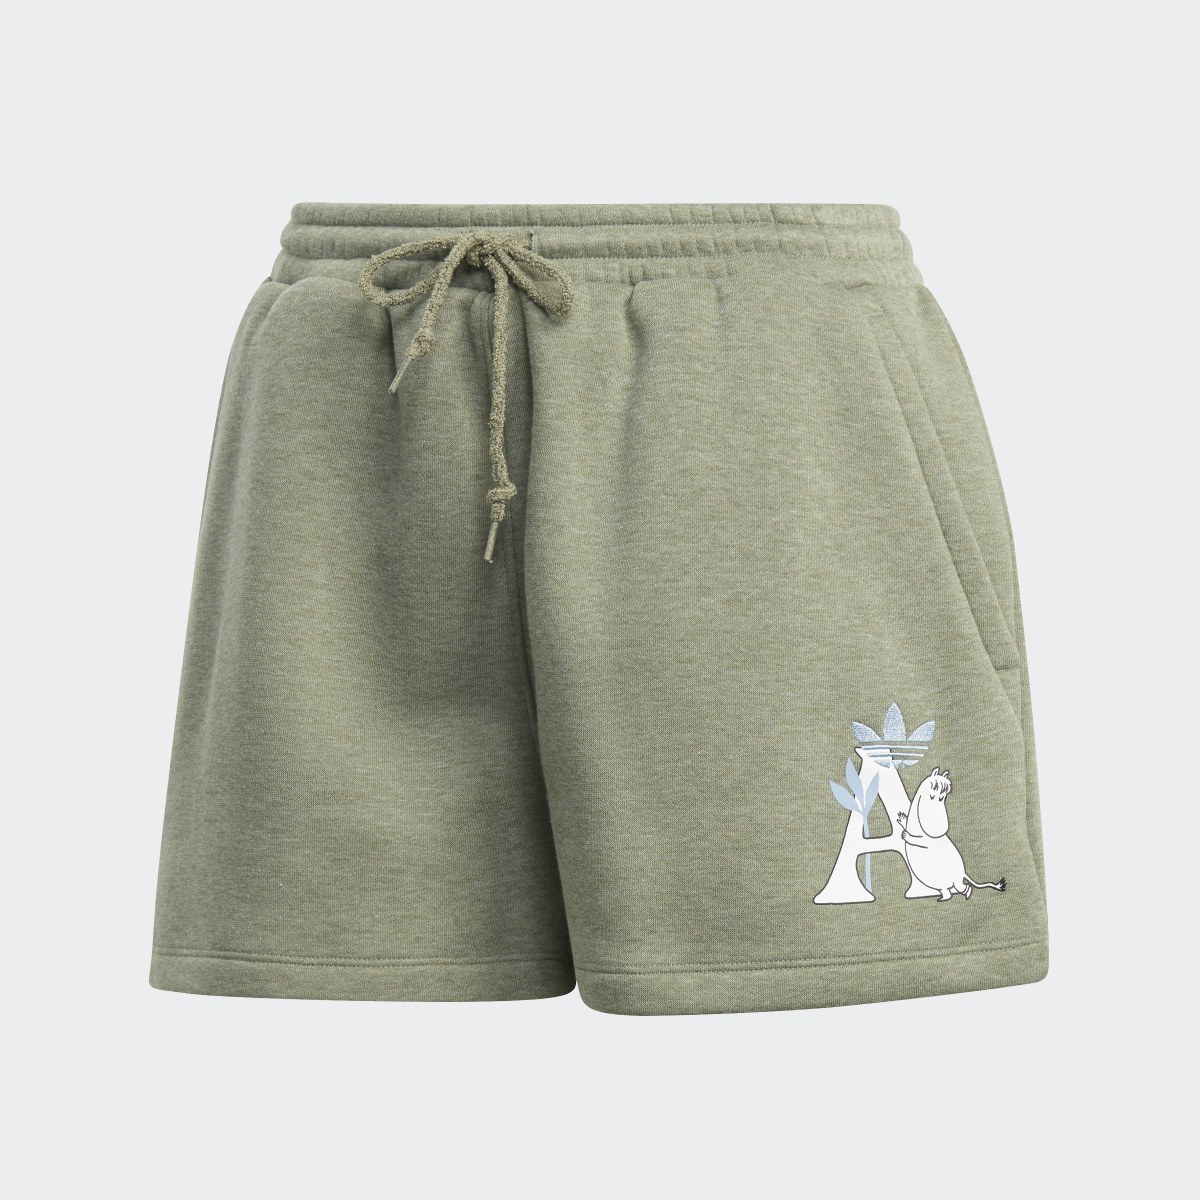 Adidas Originals x Moomin Sweat Shorts. 4